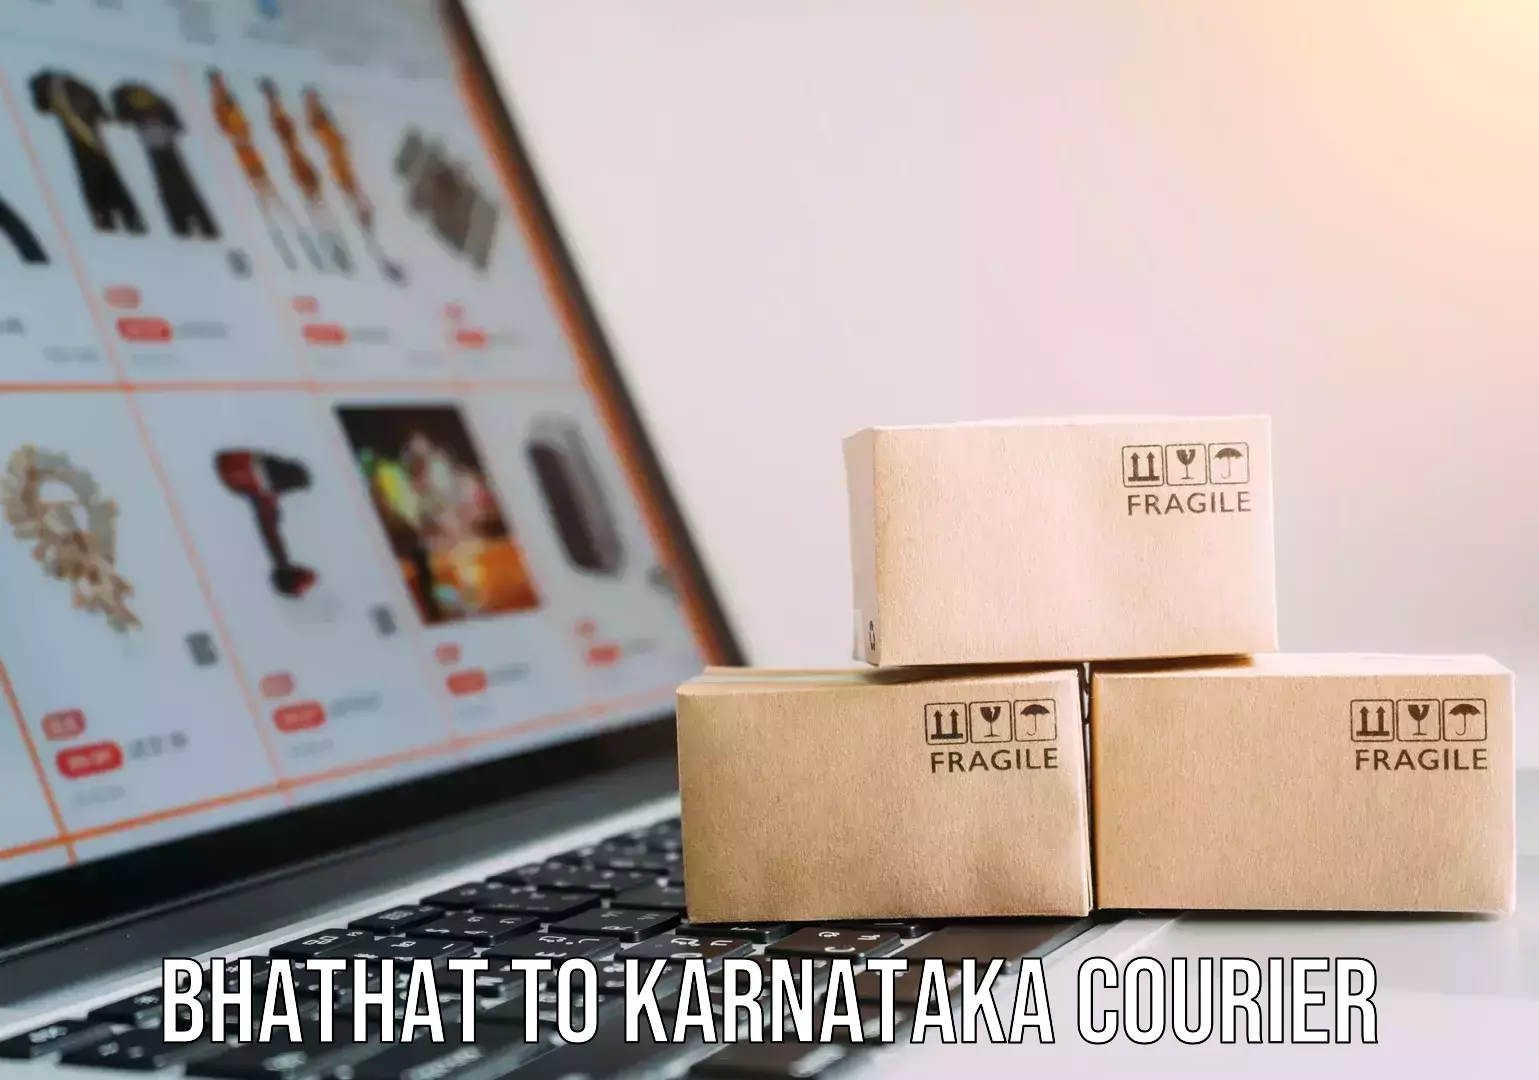 Shipping and handling Bhathat to Karnataka